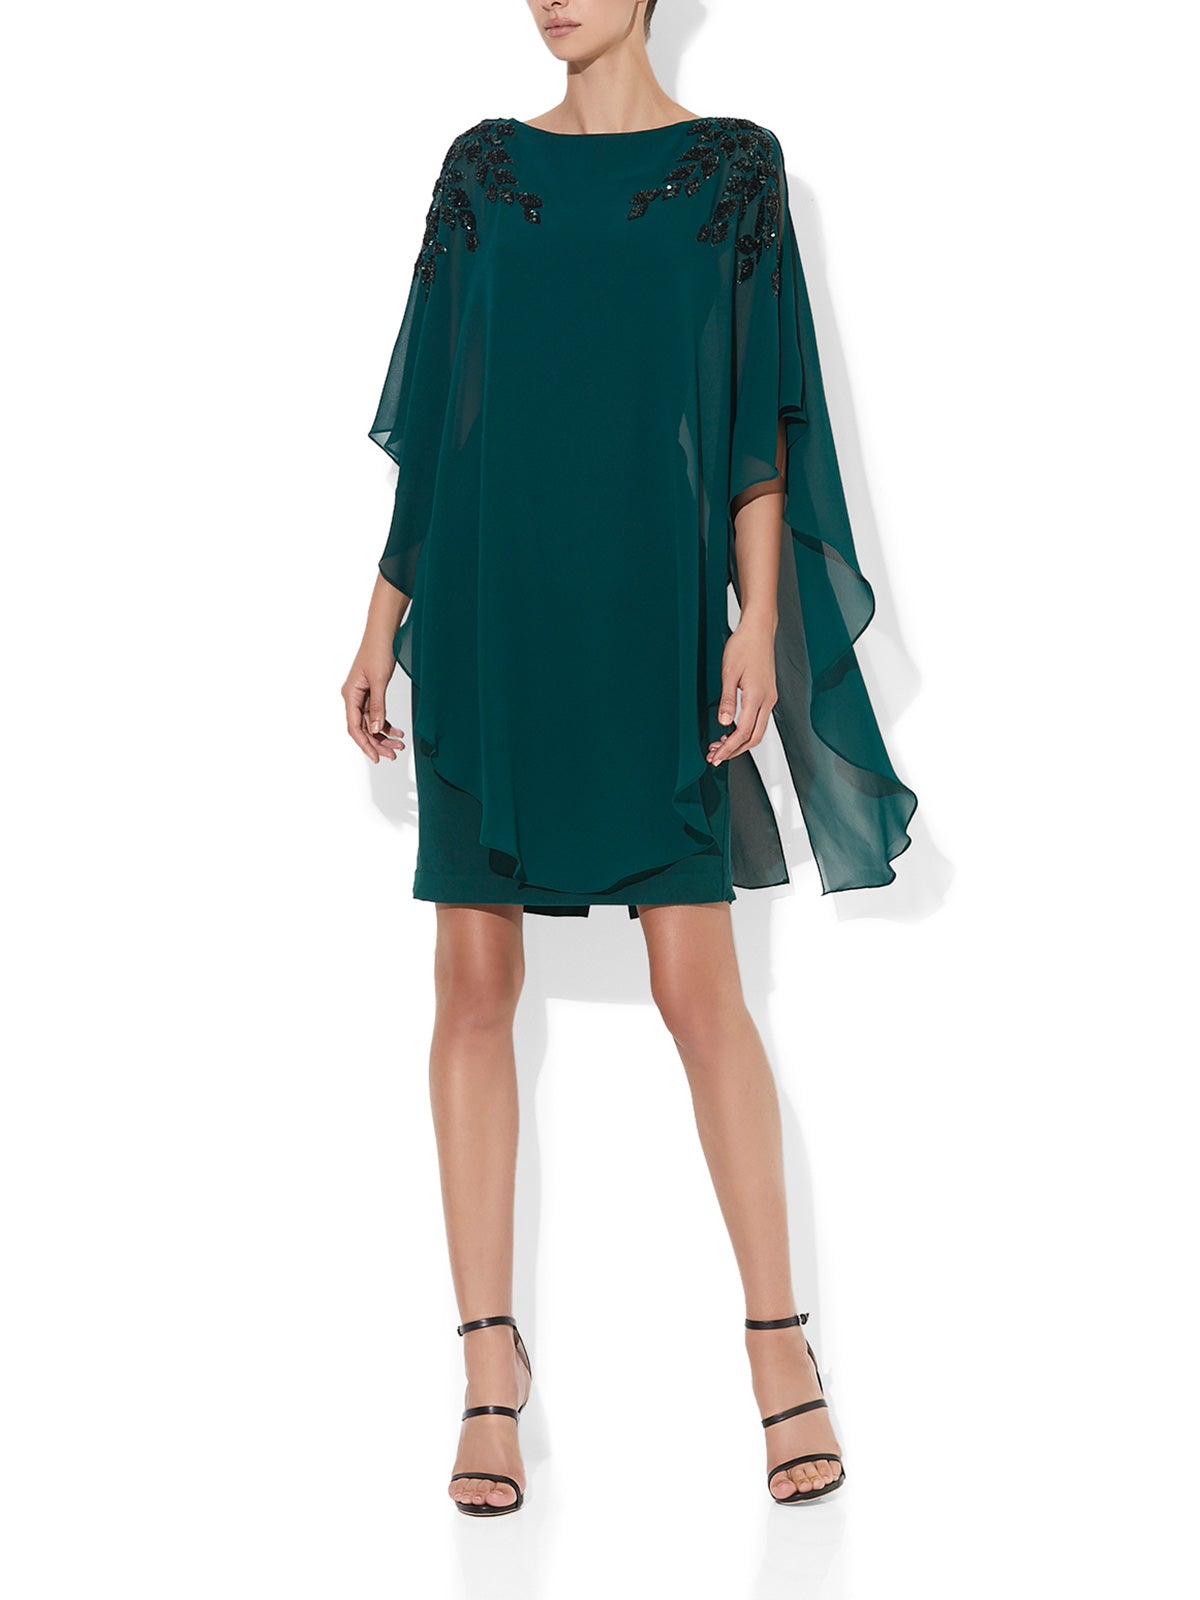 Celine Emerald Chiffon Overlay Dress by Montique